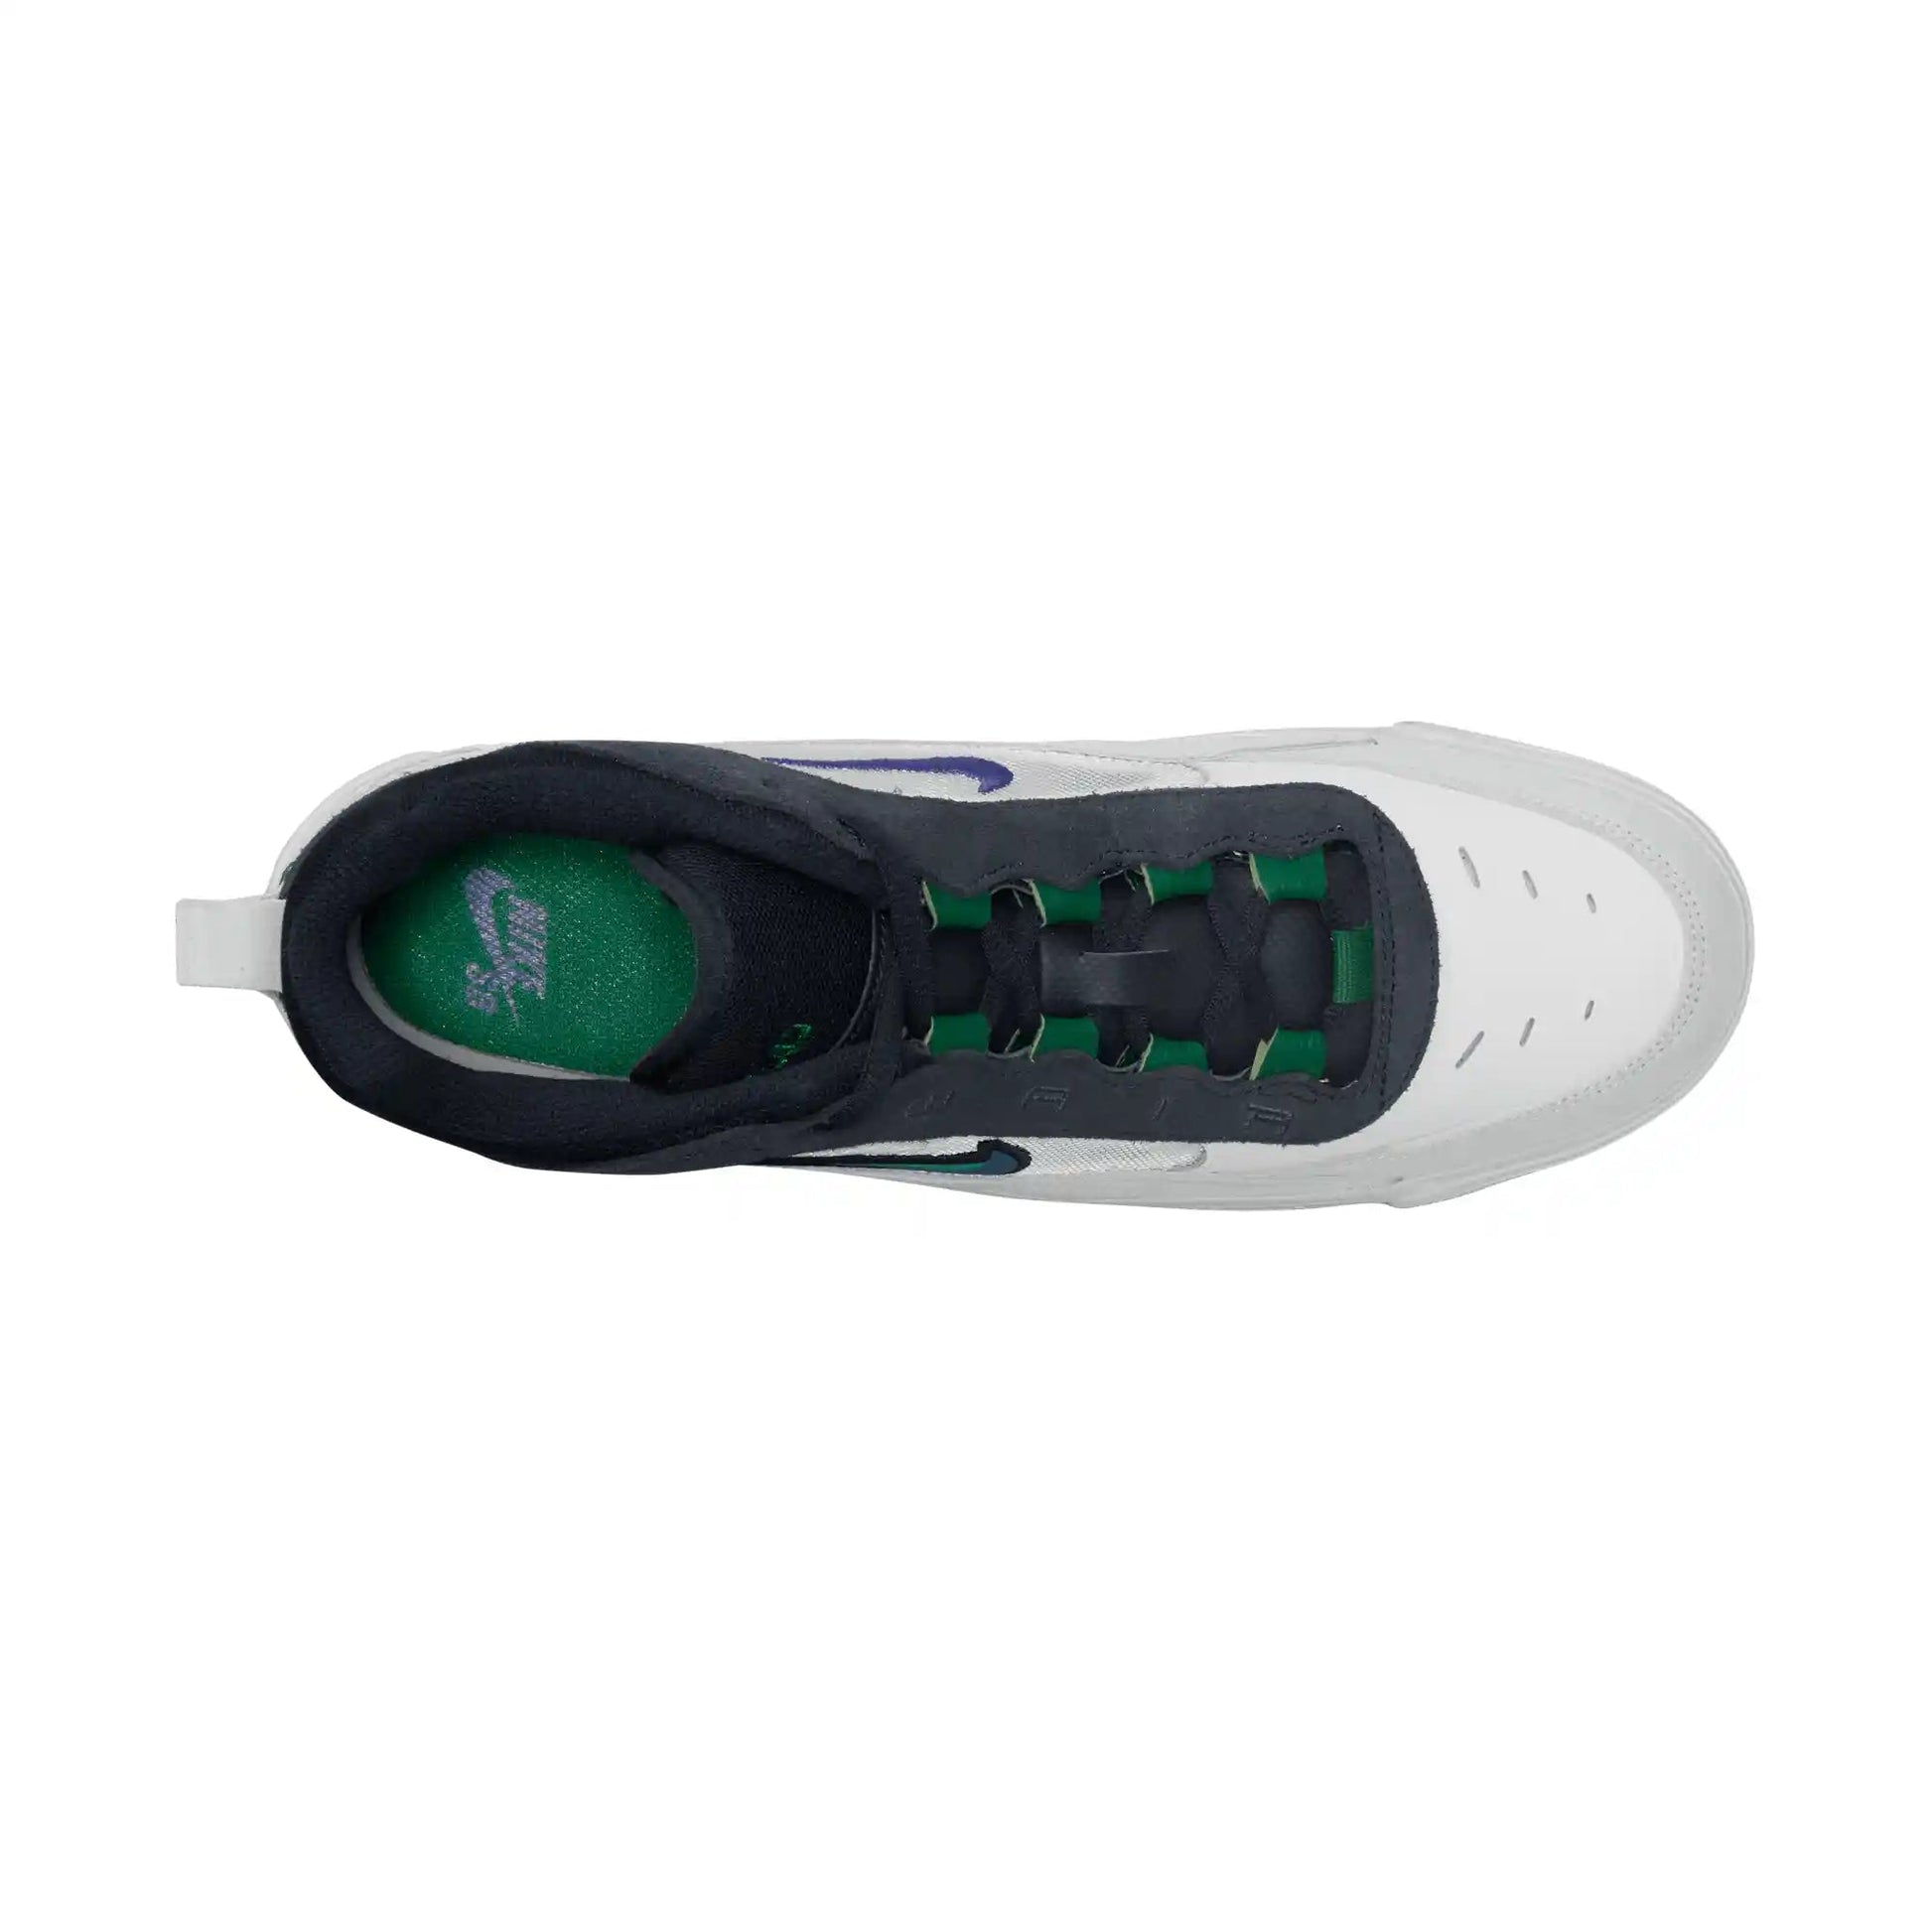 Nike SB Ishod 2, white/persian violet-obsidian-pine green - Tiki Room Skateboards - 11